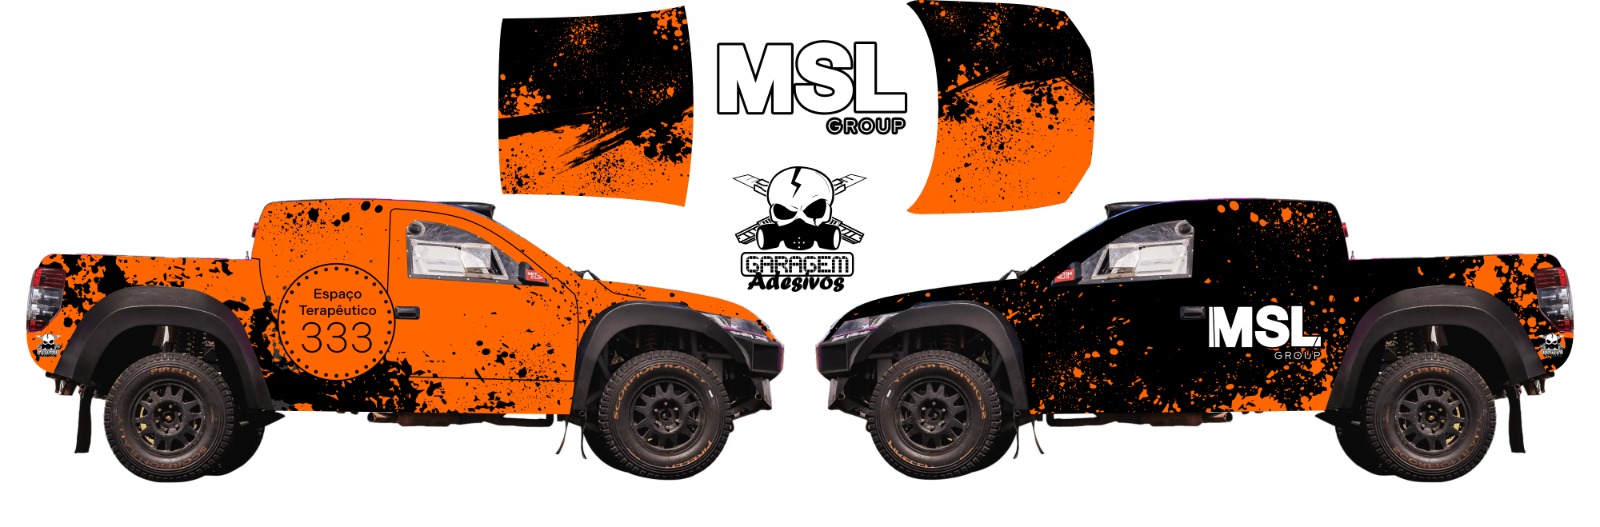 MSL Rally vai disputar a quinta etapa da Mitsubishi Cup